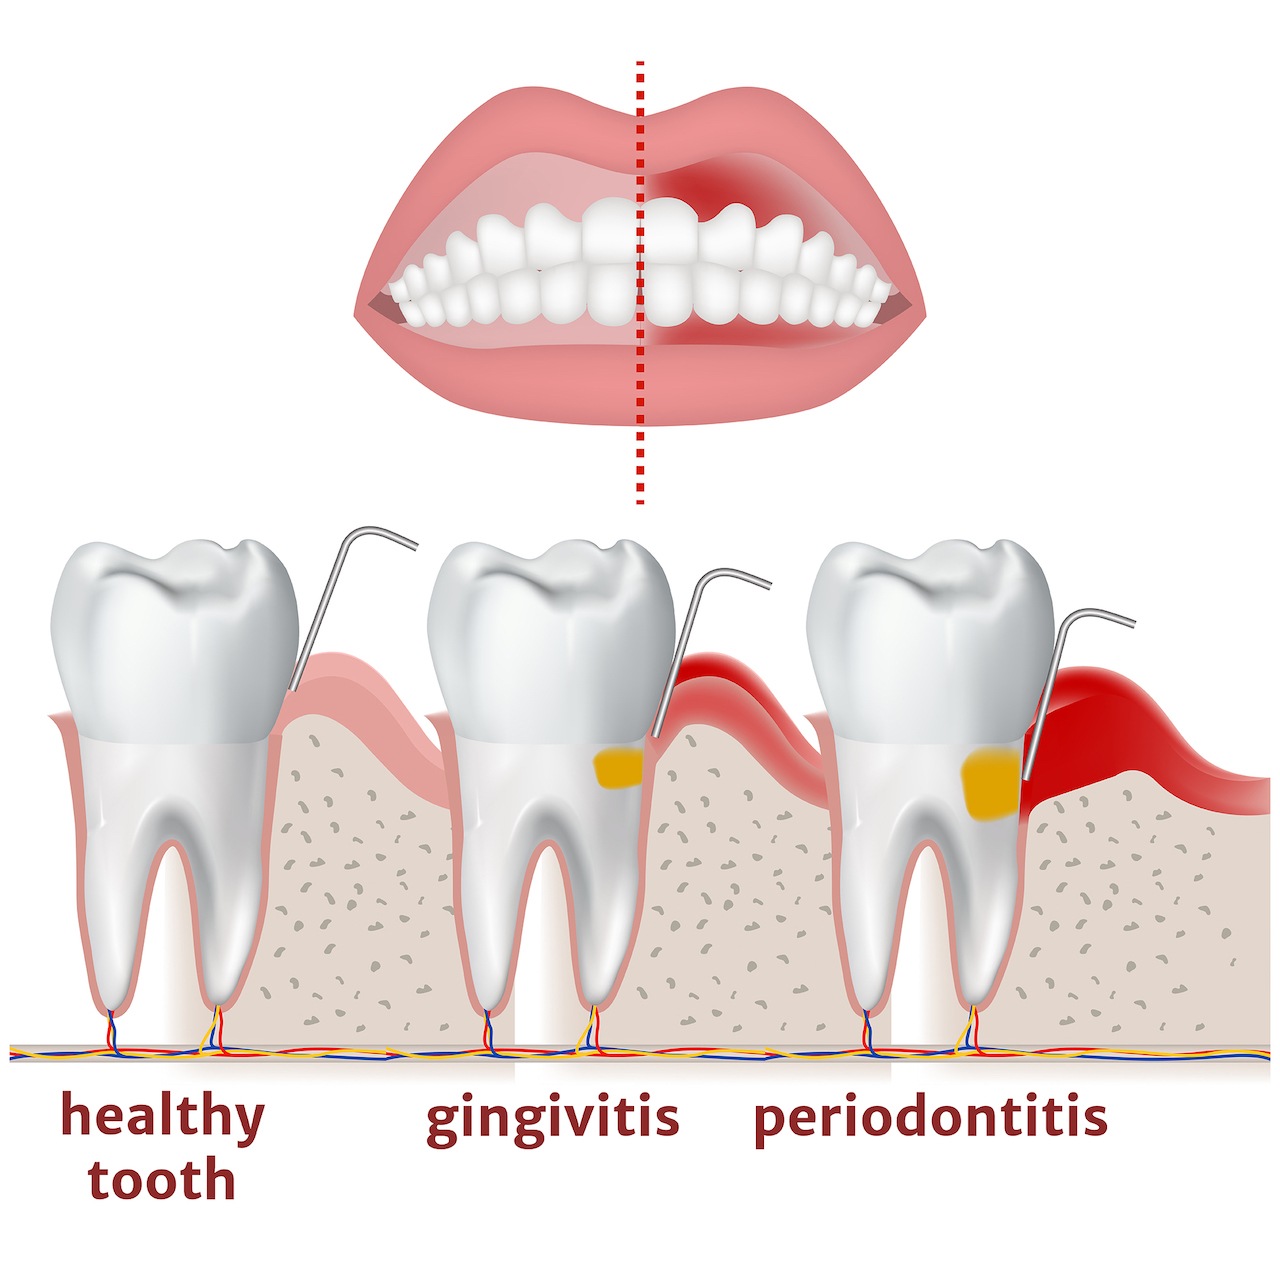 How gingivitis progress to periodontitis.